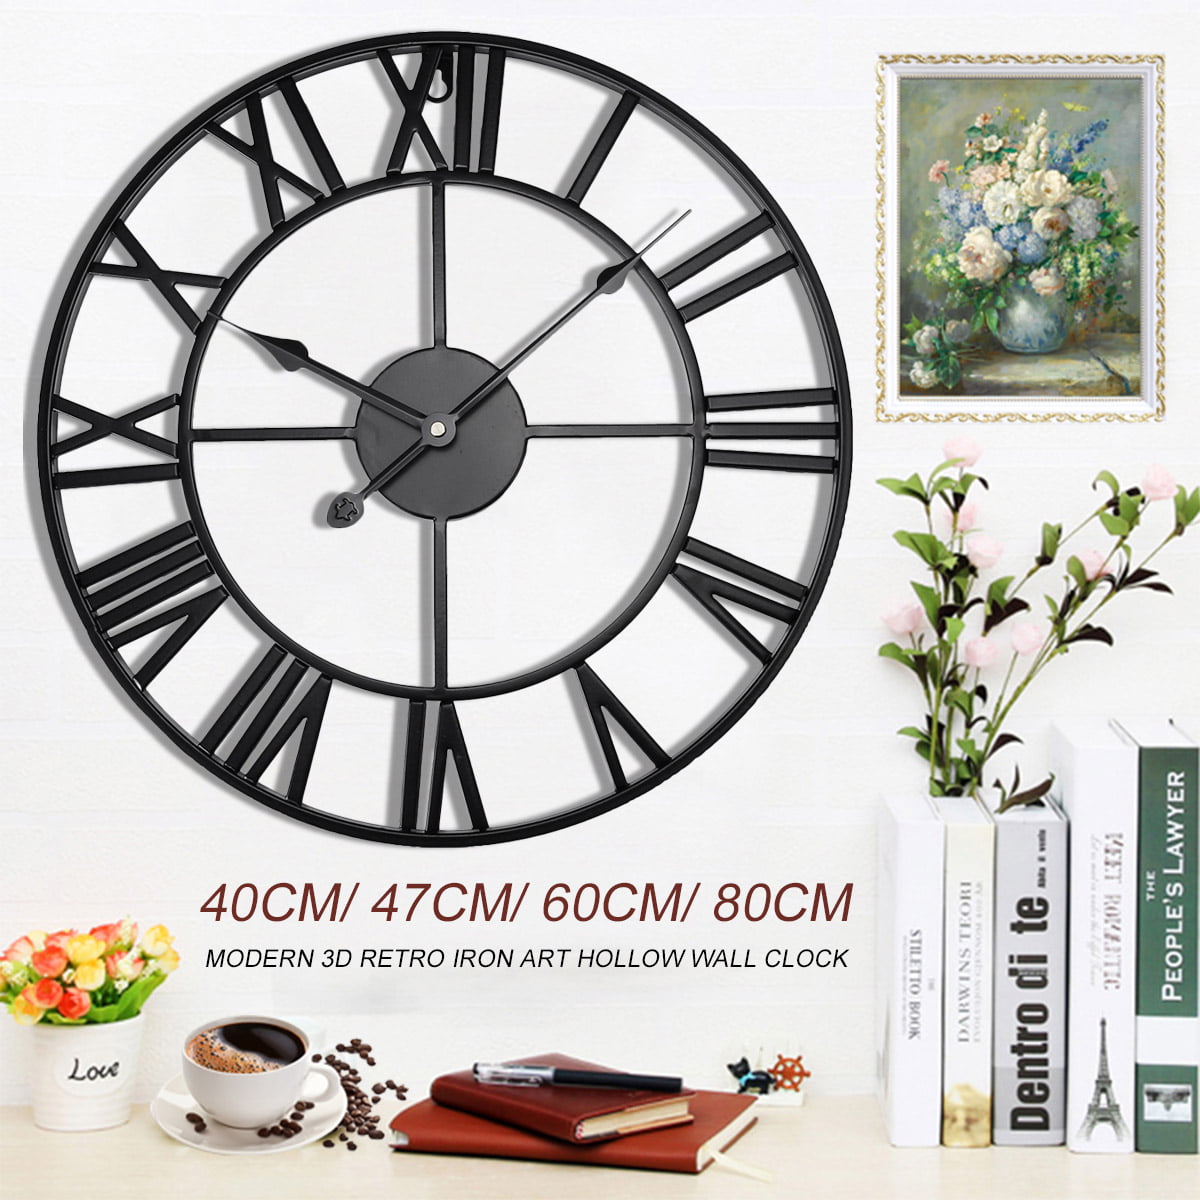 Large Roman Numeral Wall Clock Indoor Outdoor Garden Metal Round Clocks 40/60cm 